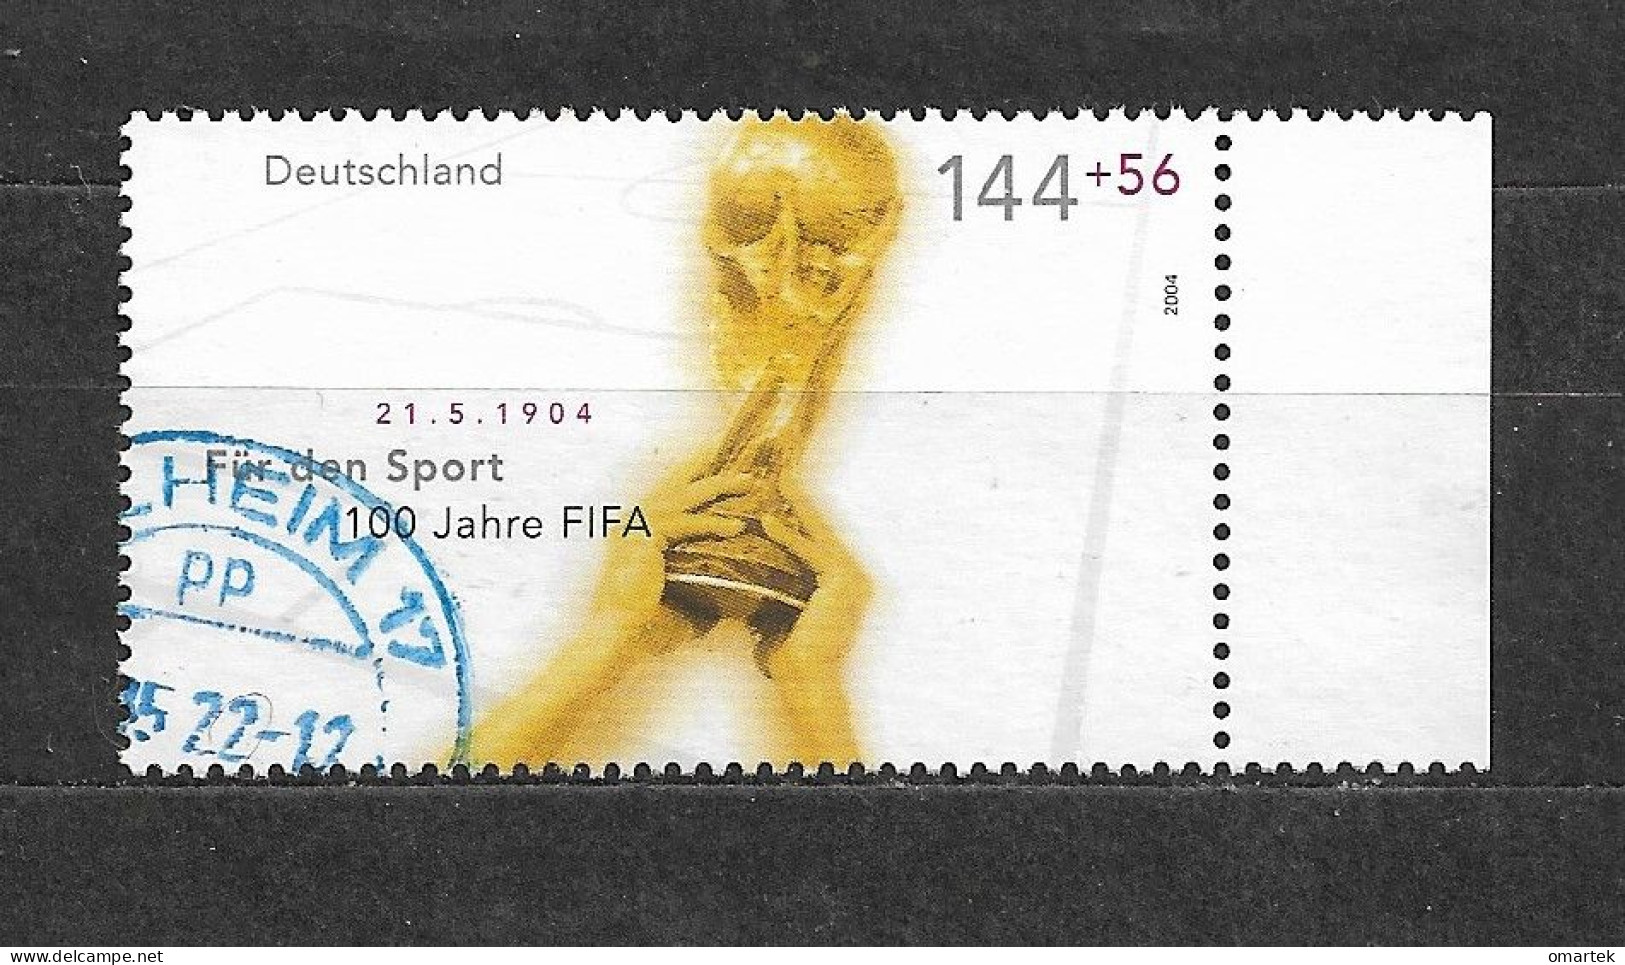 Deutschland Germany BRD 2004 ⊙ Mi 2328 FIFA World Cup Trophy. - Usados